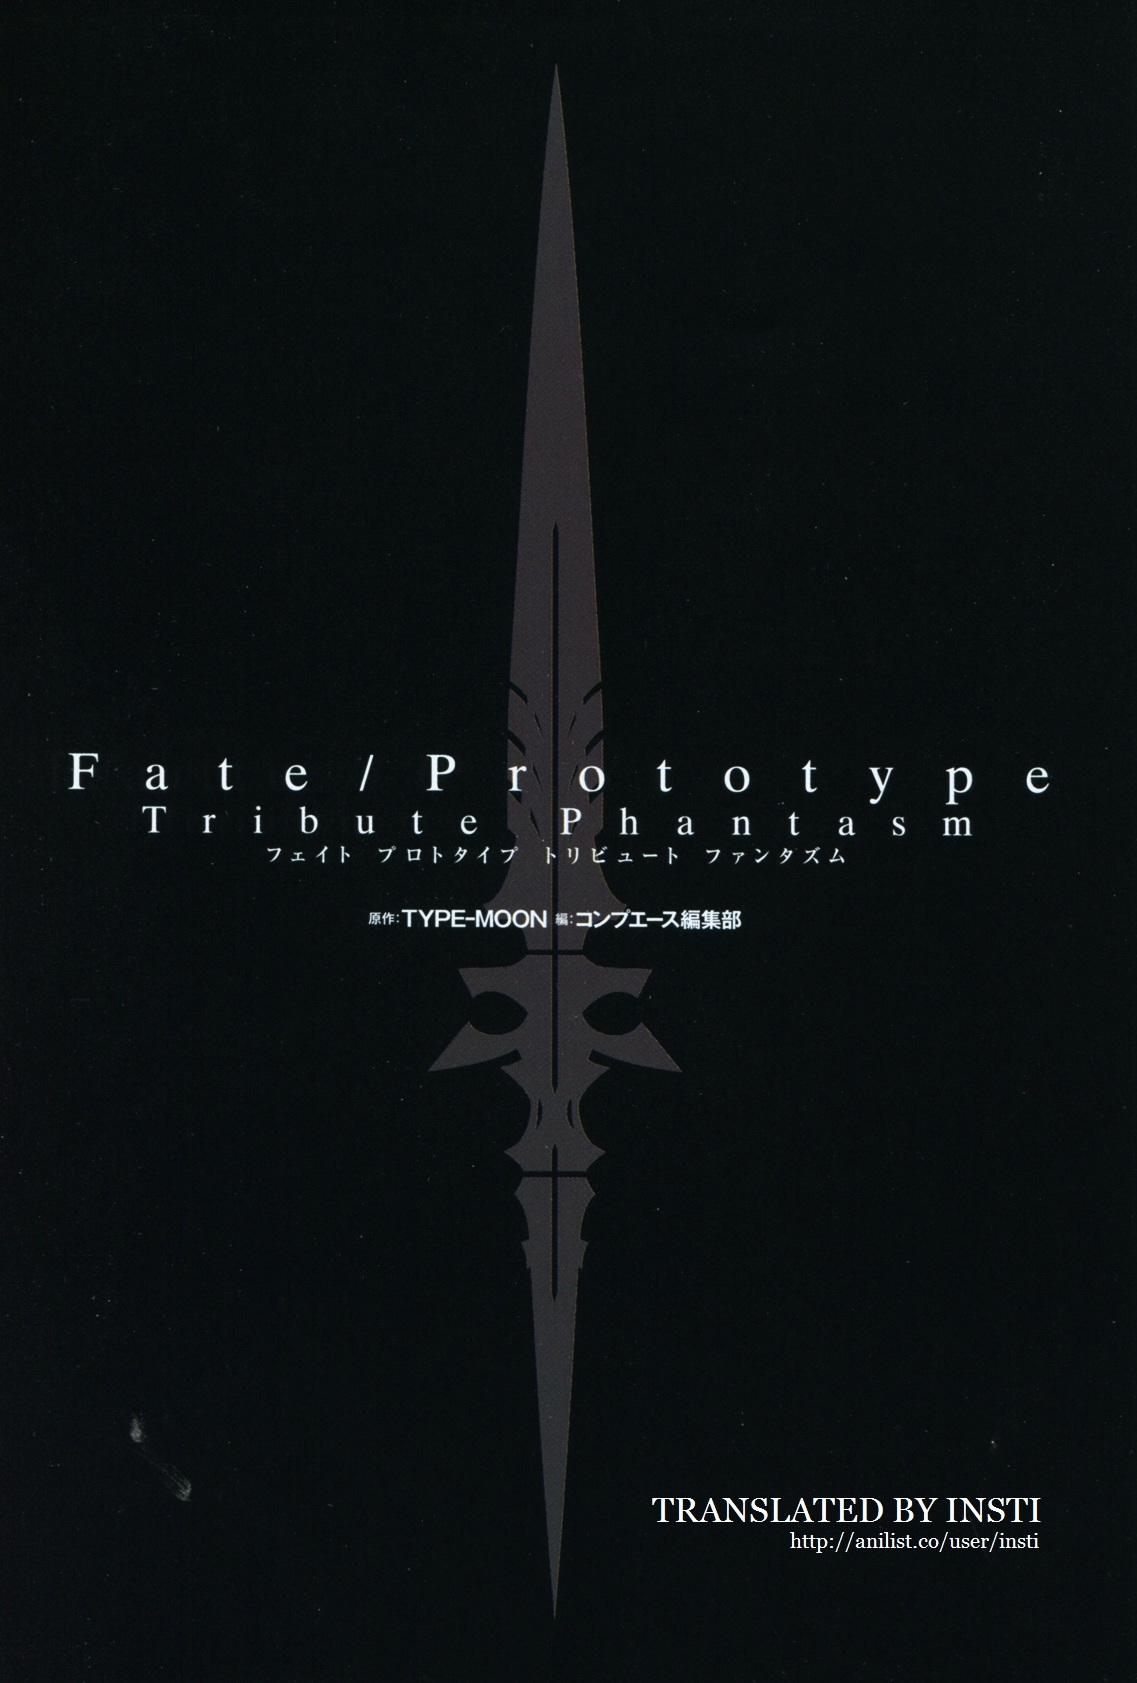 Fate/prototype - Tribute Phantasm - Page 1